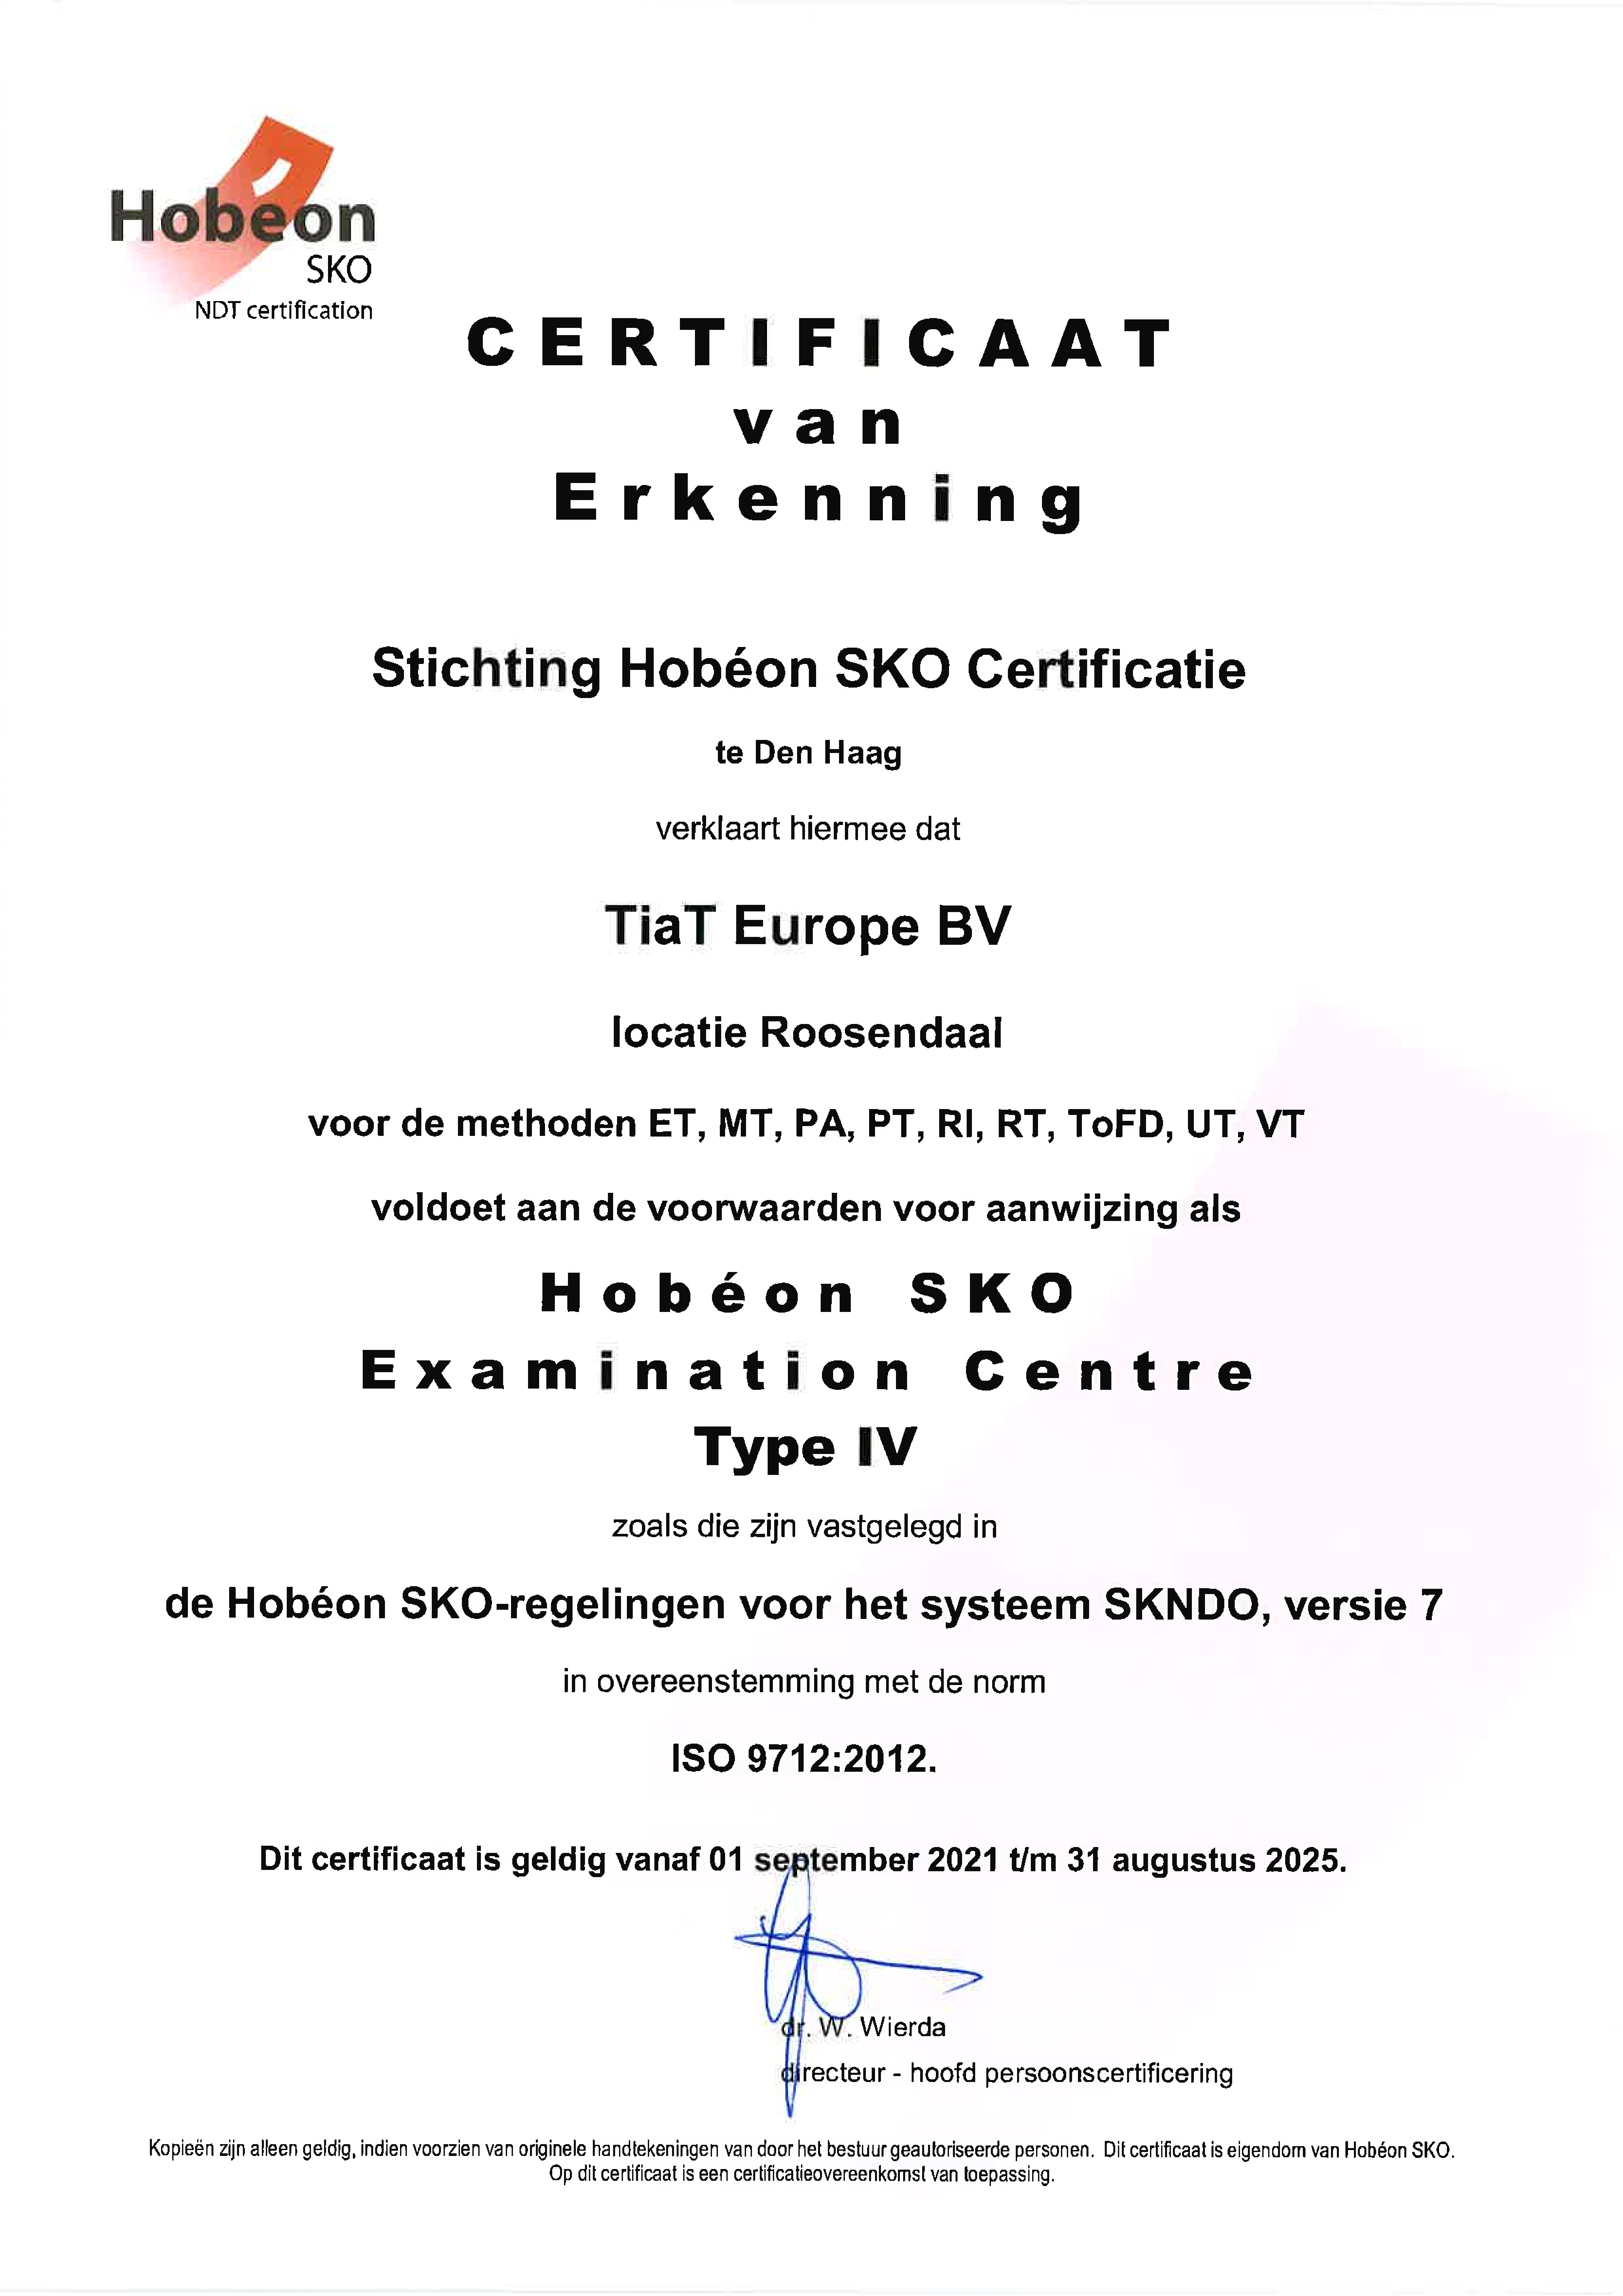 Examination Centre Type 4 - HSKO (ISO 9712)